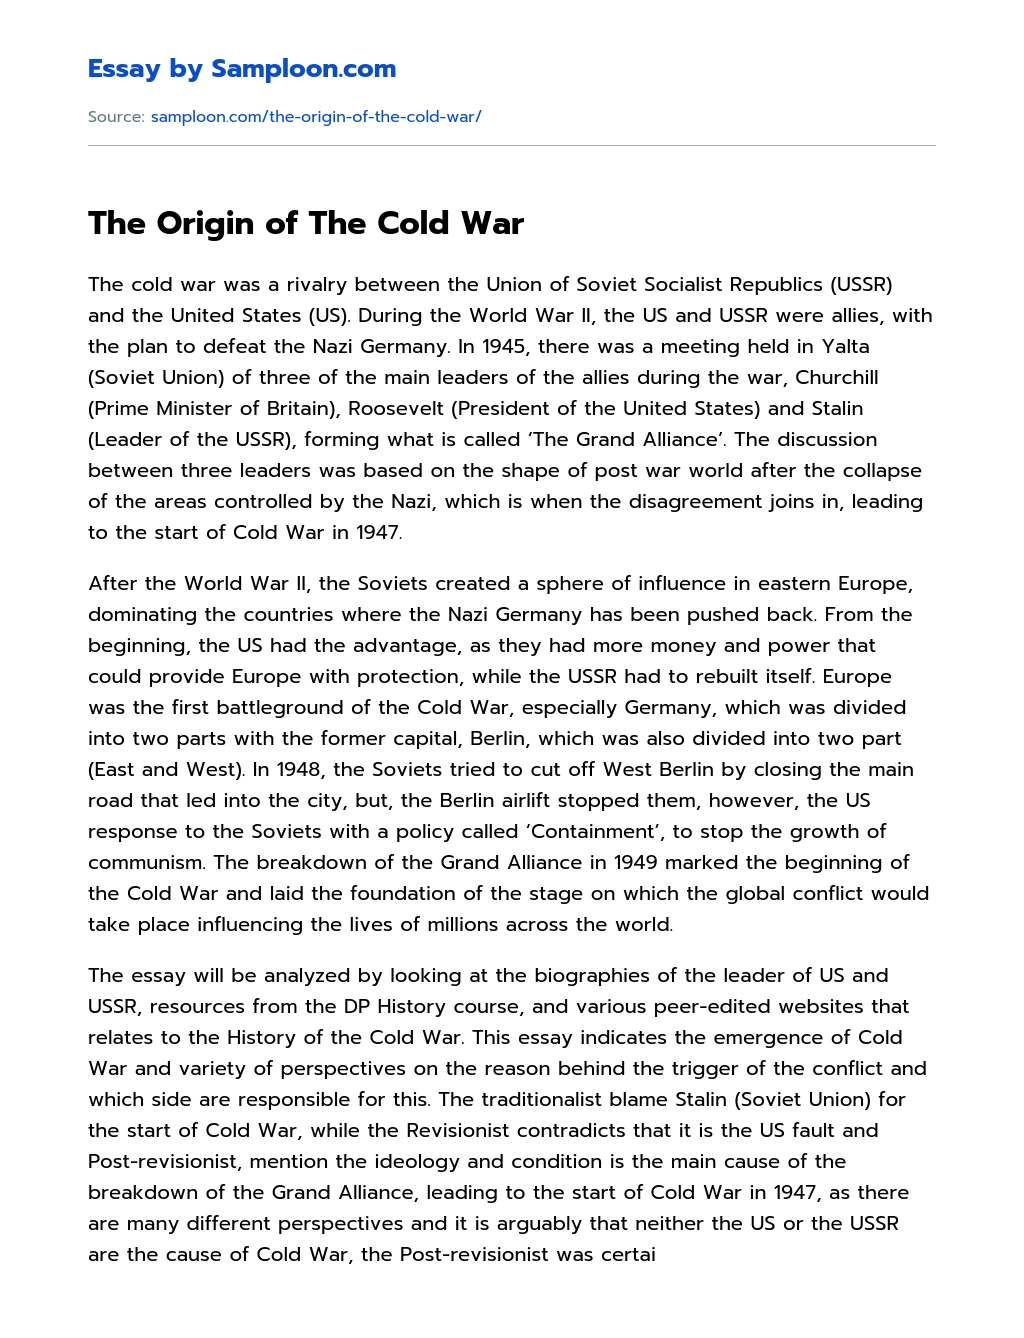 The Origin of The Cold War essay